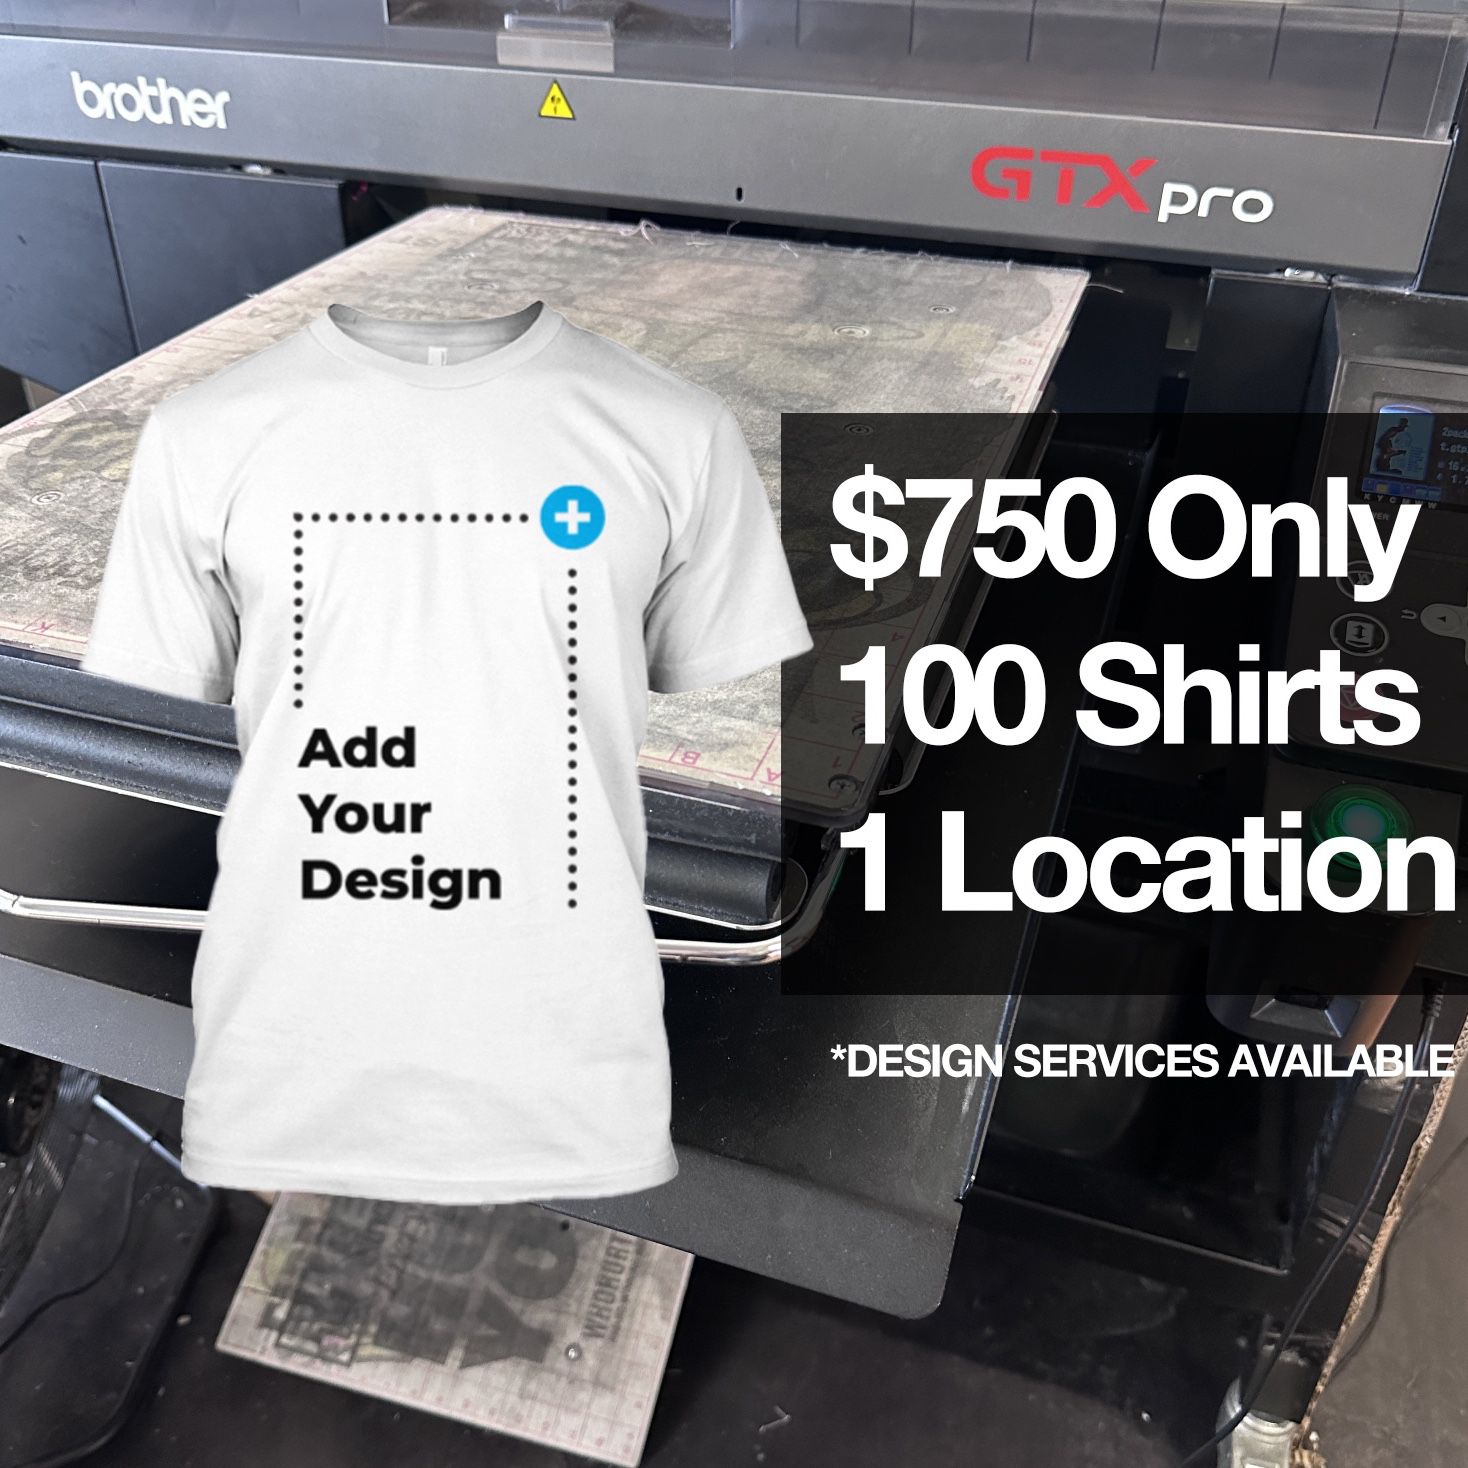 100 Printed Shirts Bundle